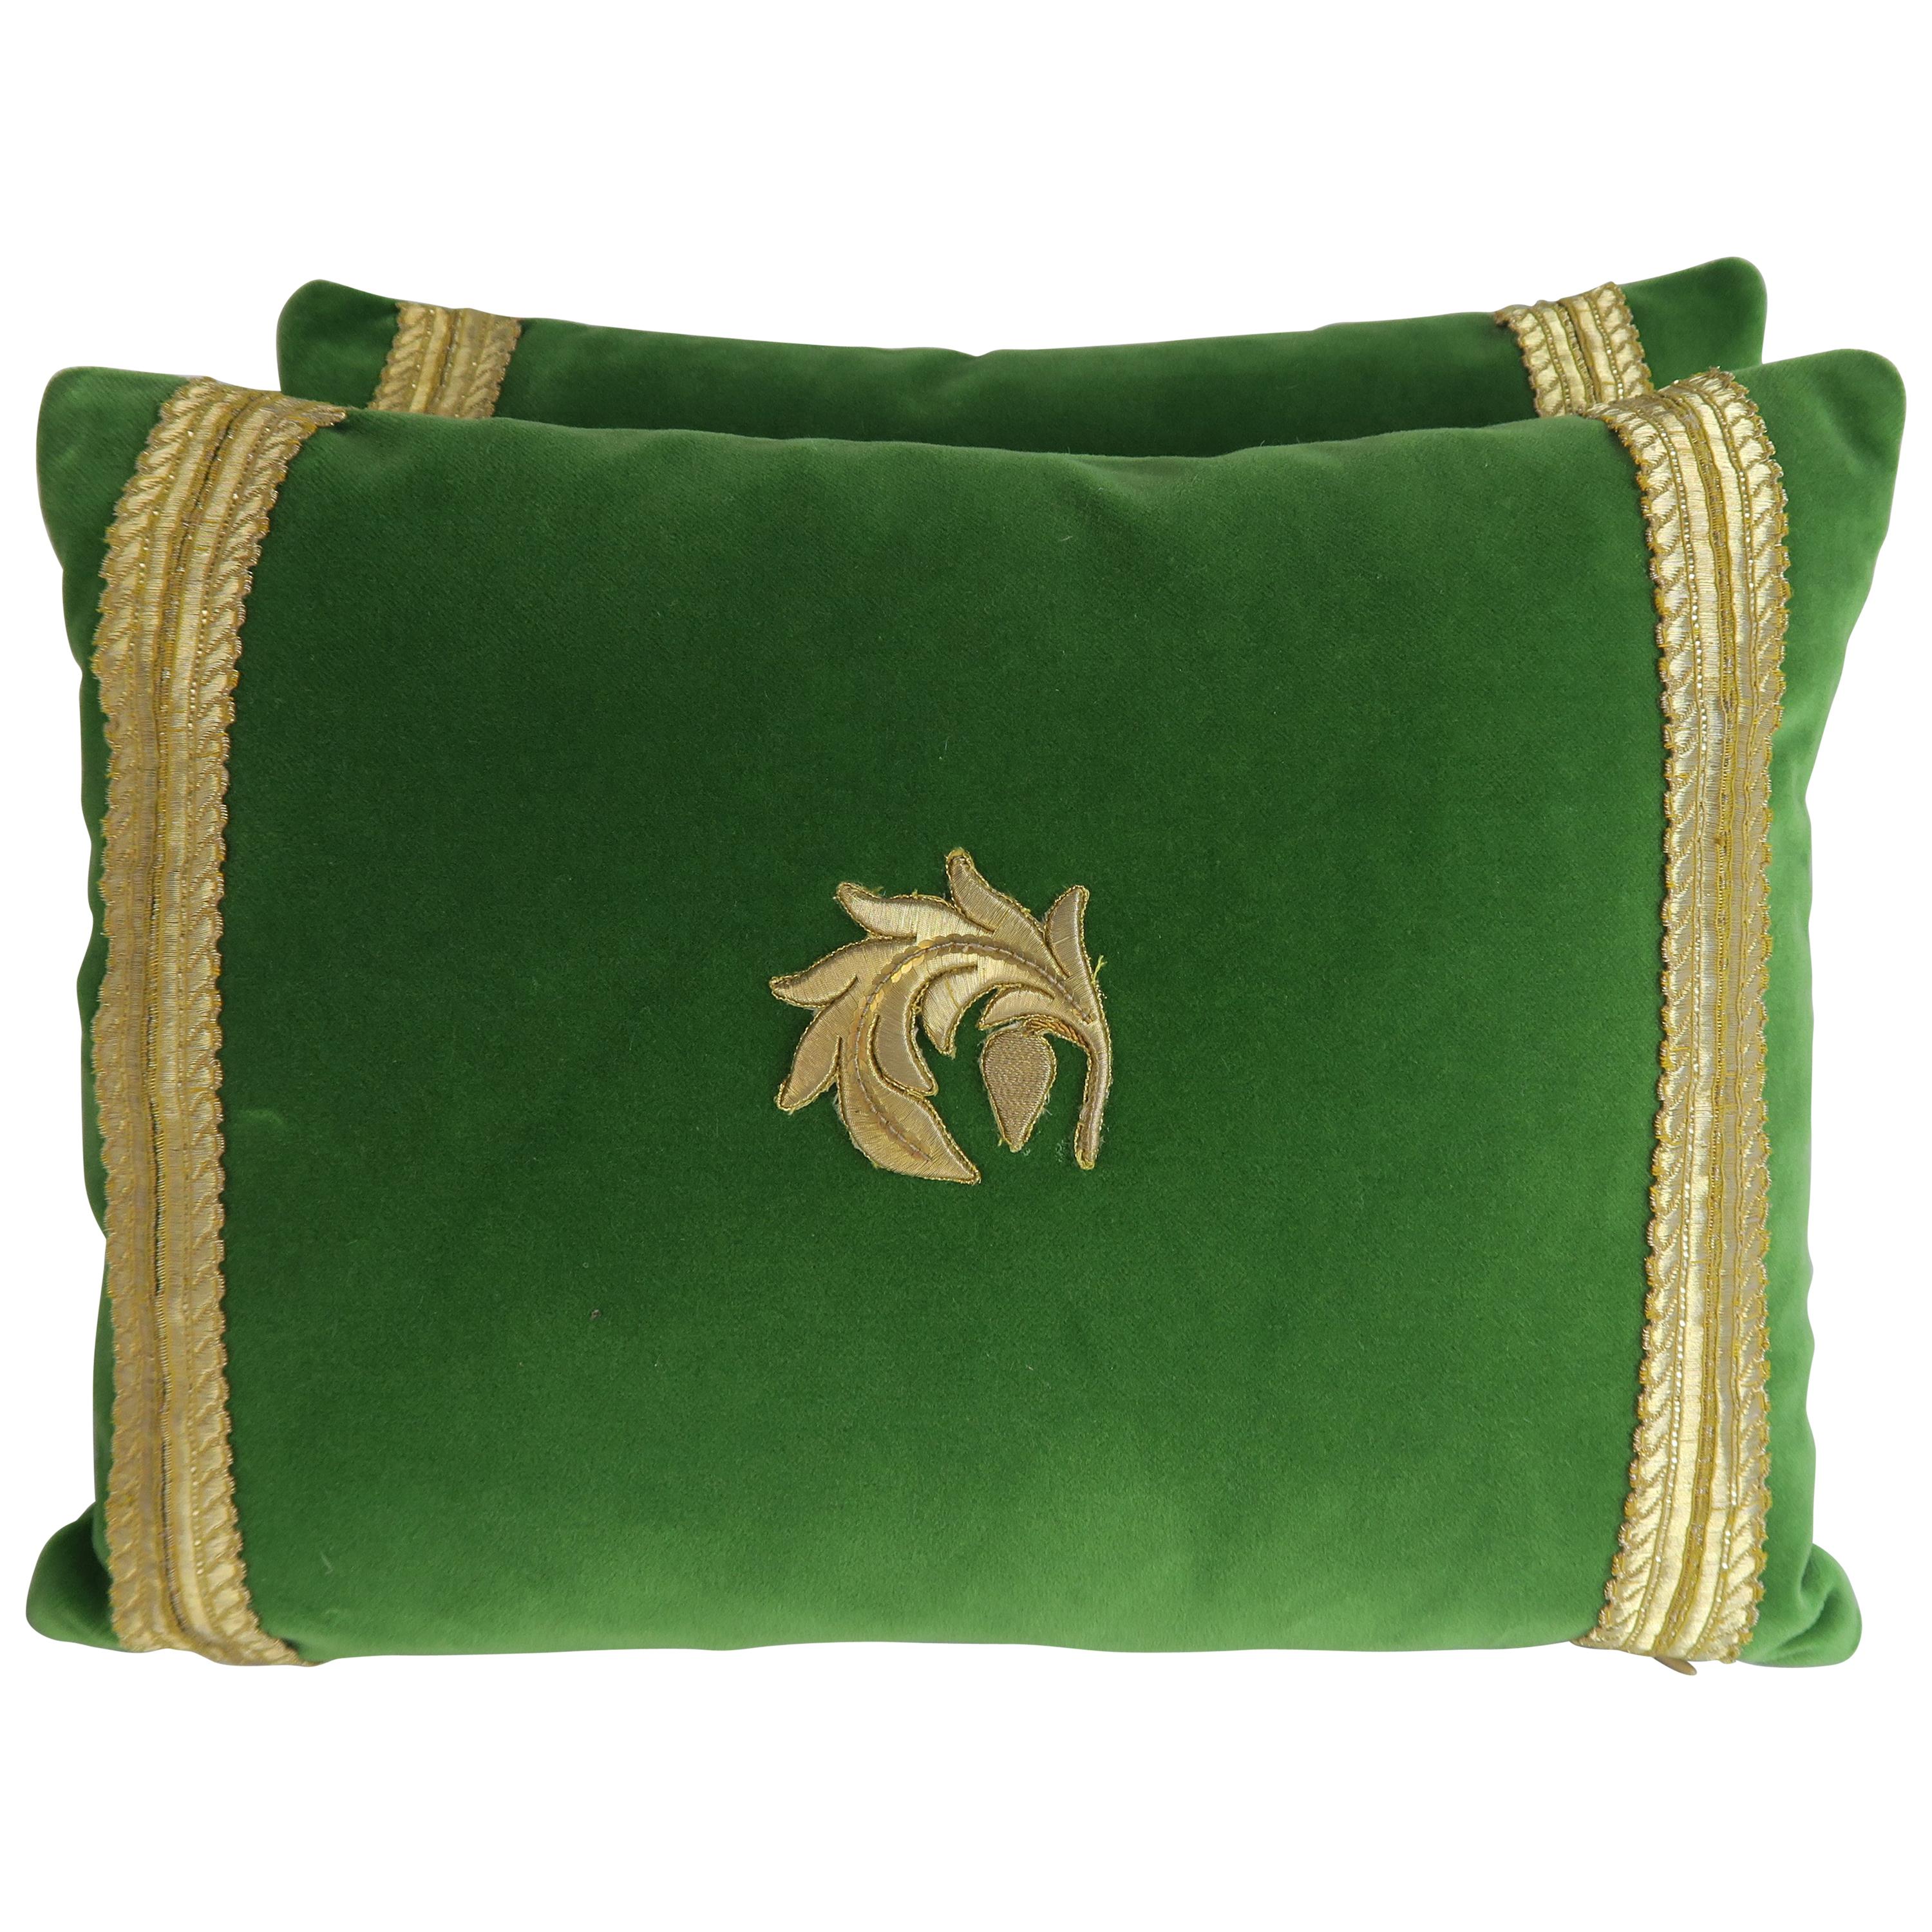 Metallic Embroidered Green Velvet Pillows, Pair